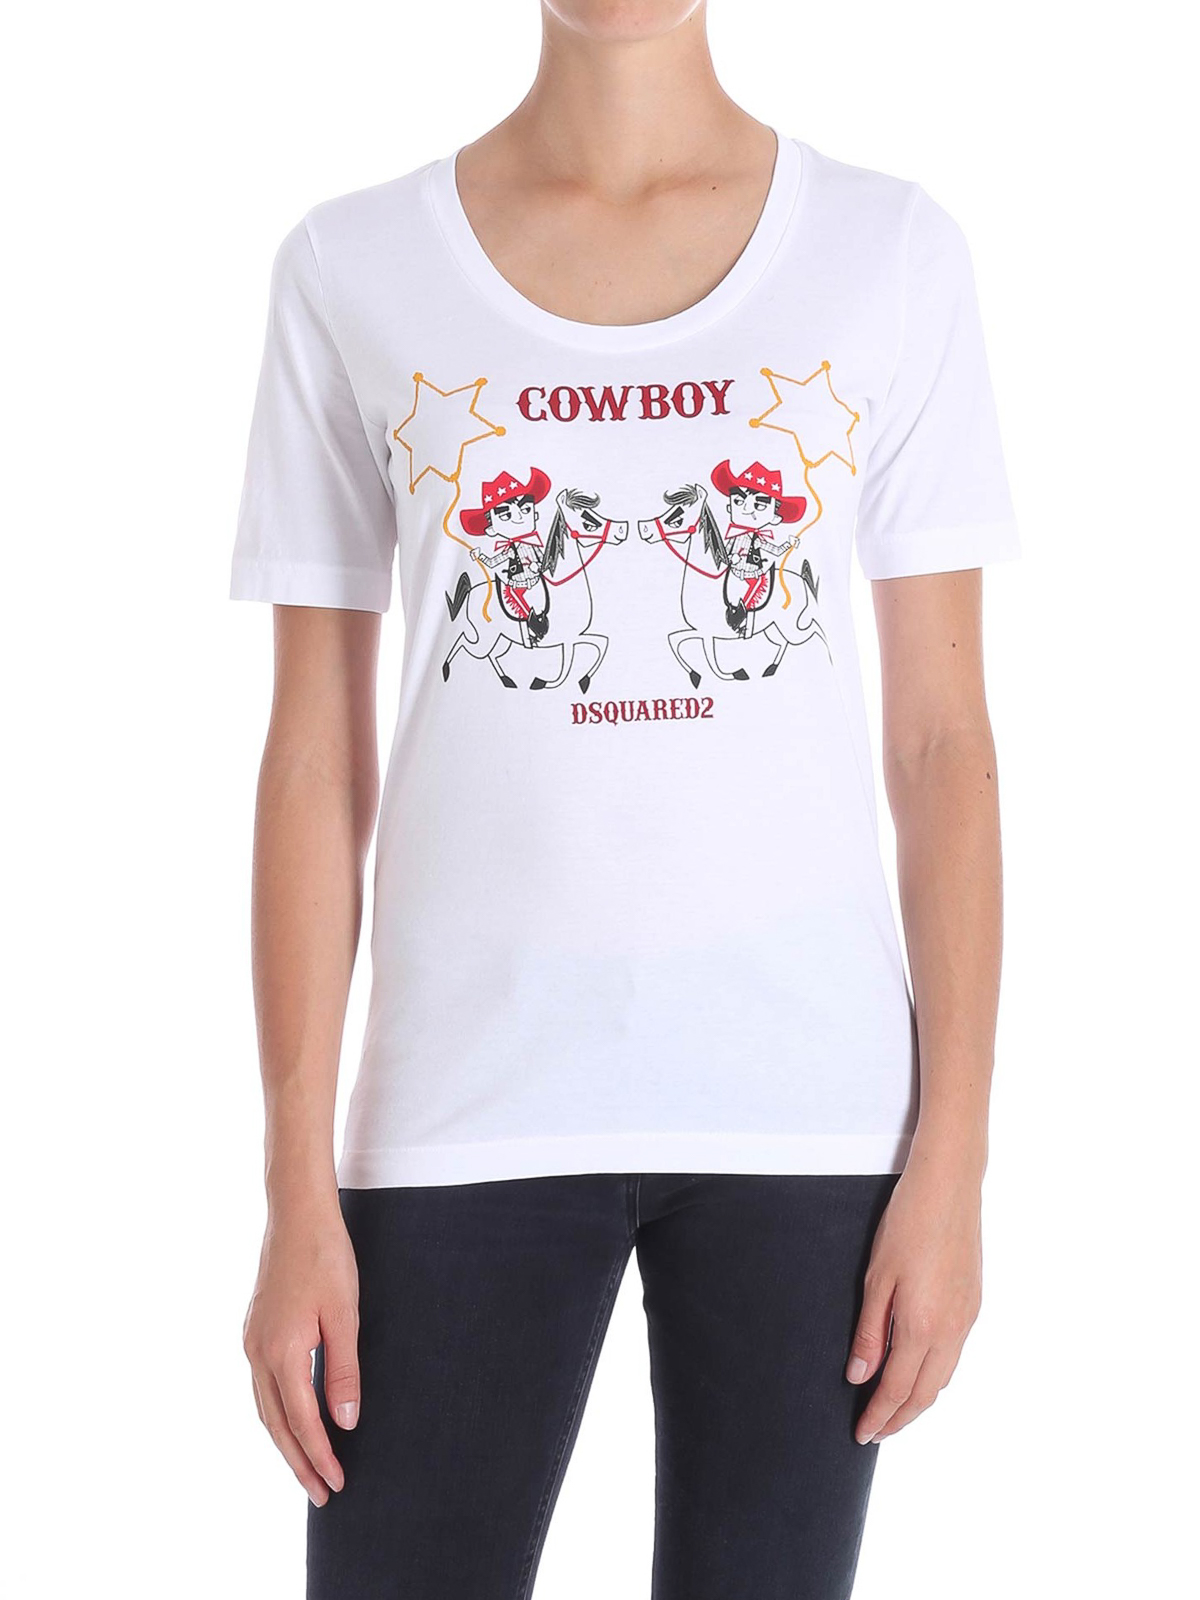 dsquared2 cowboy shirt